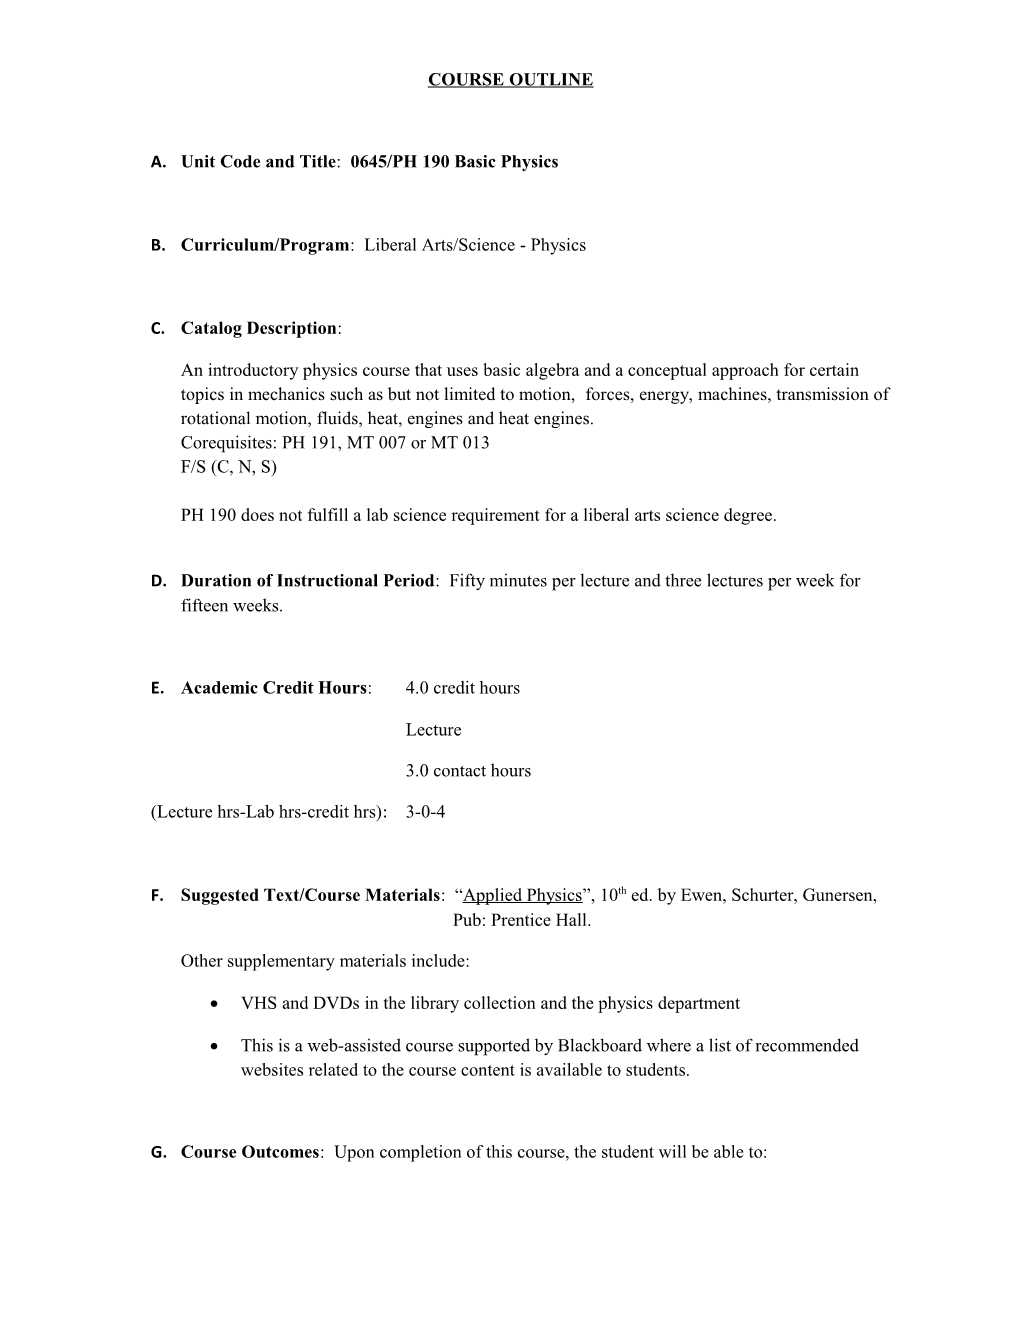 A. Unit Code and Title: 0645/PH 190 Basic Physics